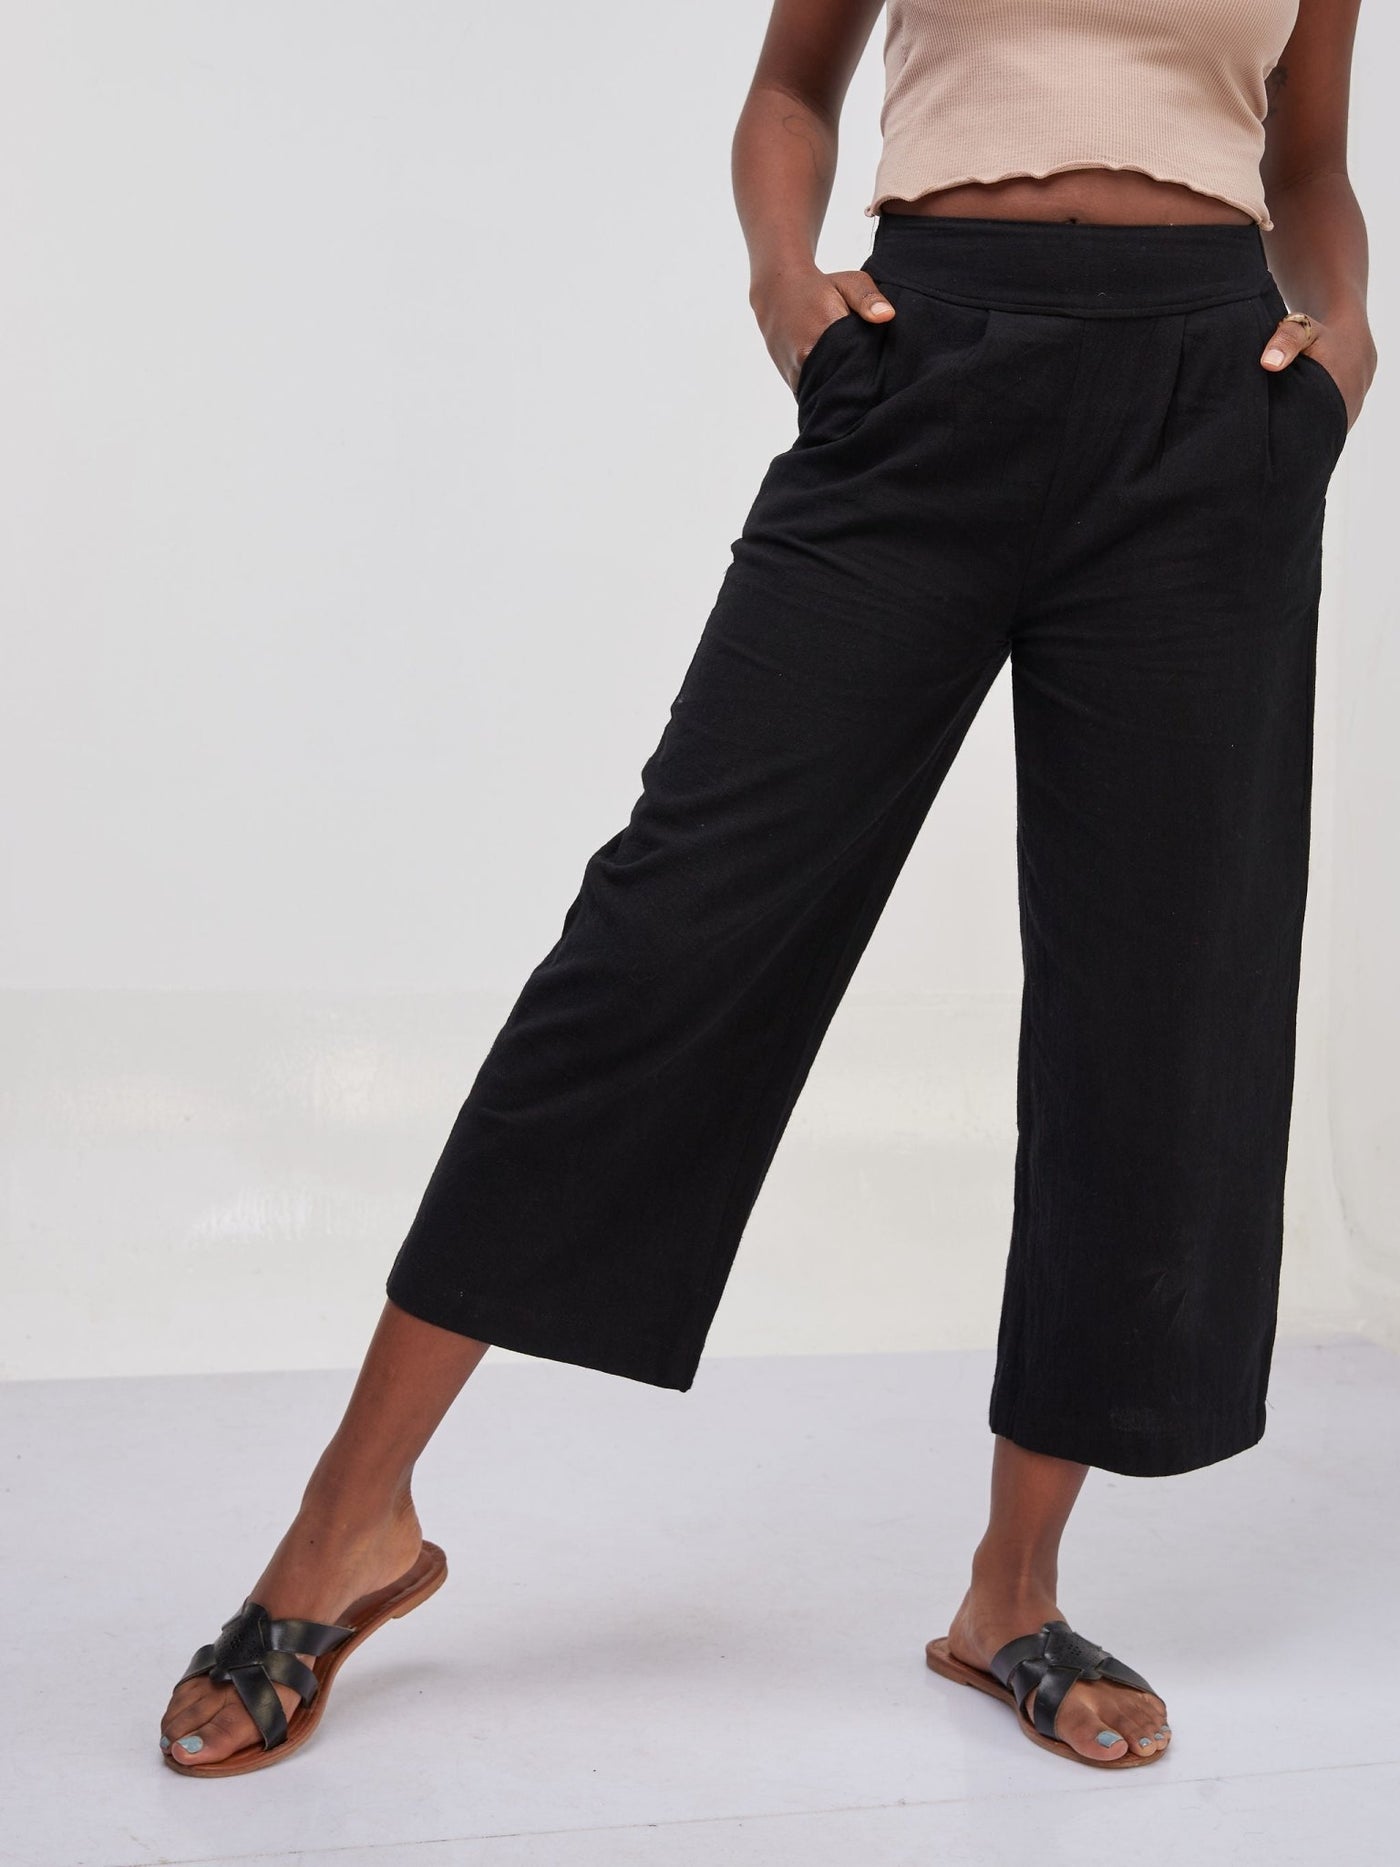 Anika Cheese Cloth Capri Pants - Black - Shop Zetu Kenya